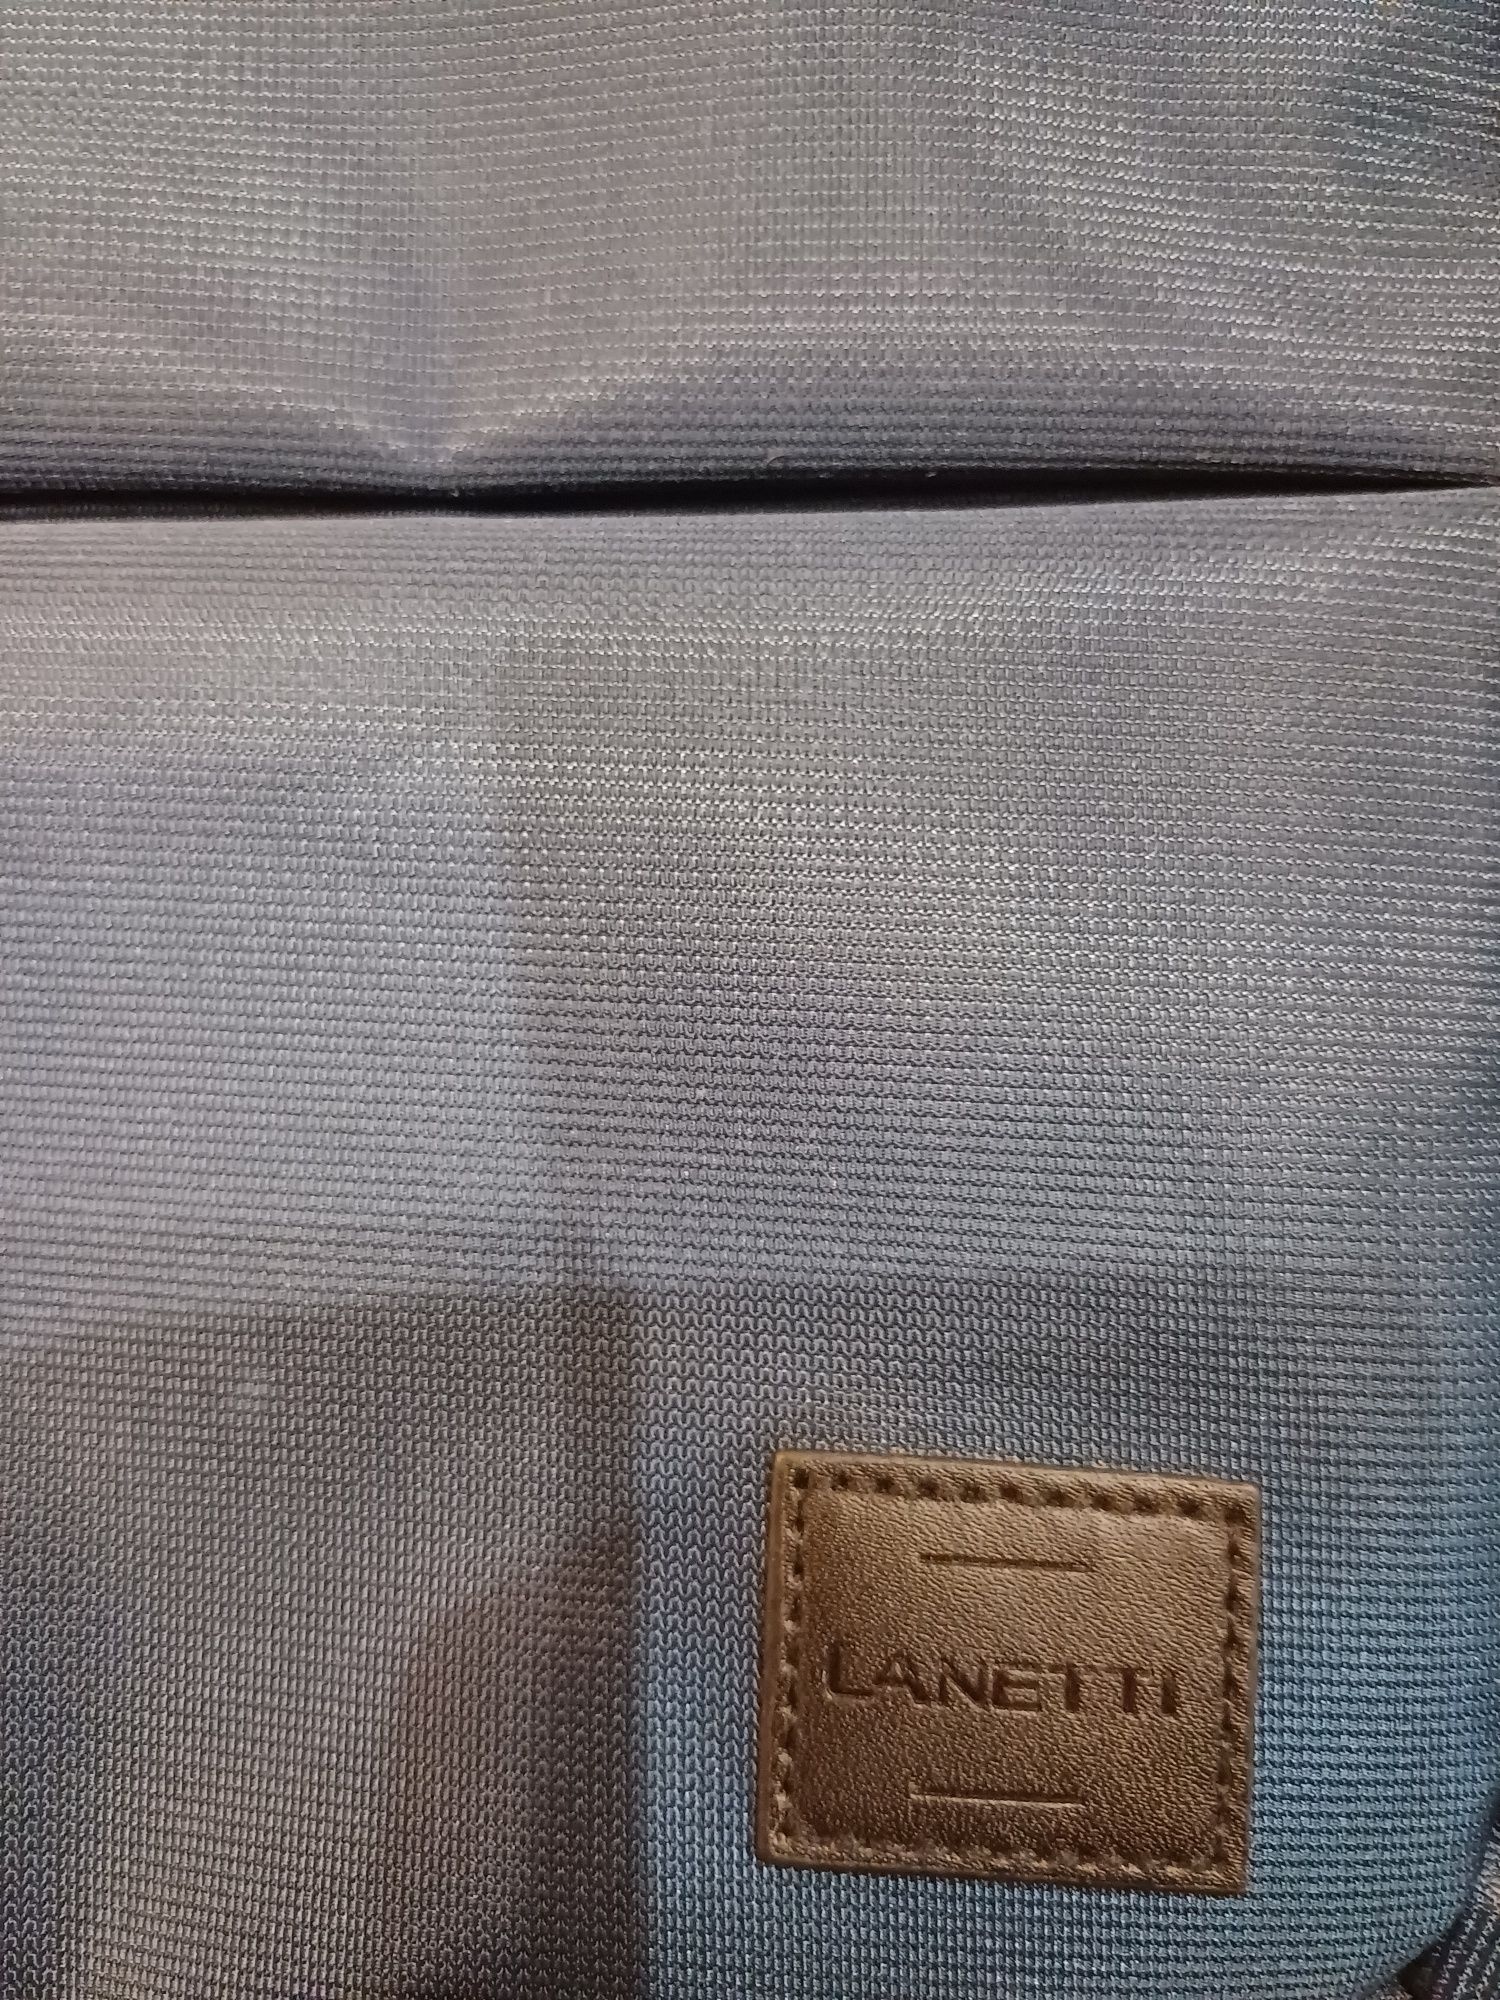 Plecak Lanetti- Cobalt Blue